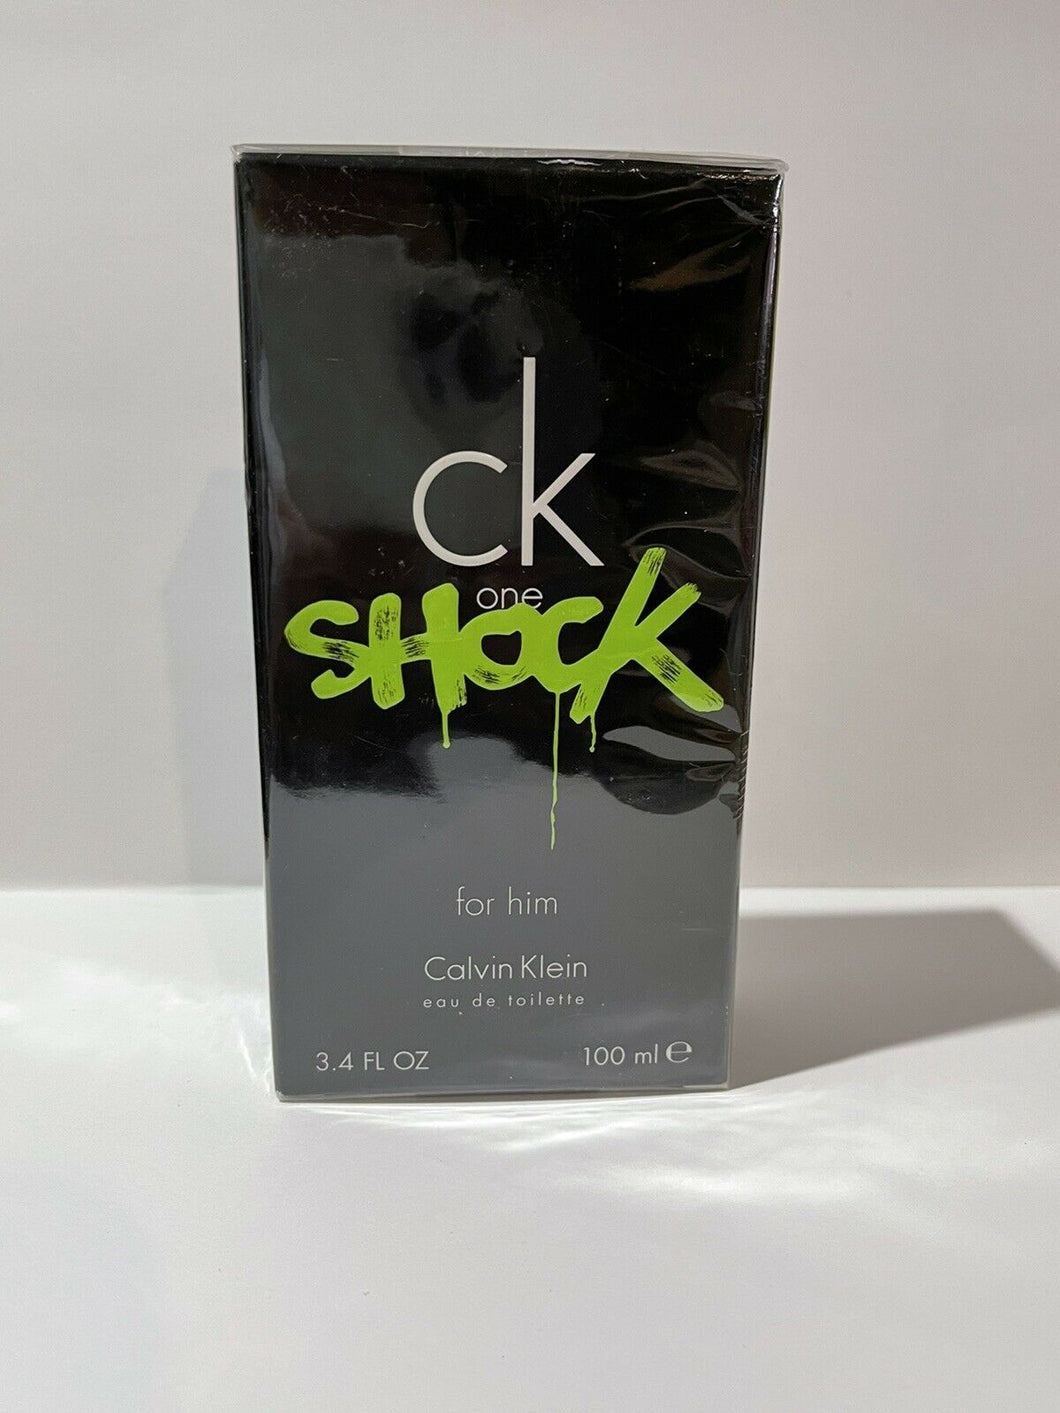 CK ONE SHOCK by Calvin Klein EDT Spray For Him 3.4 oz 100 ml * NEW IN SEALED BOX